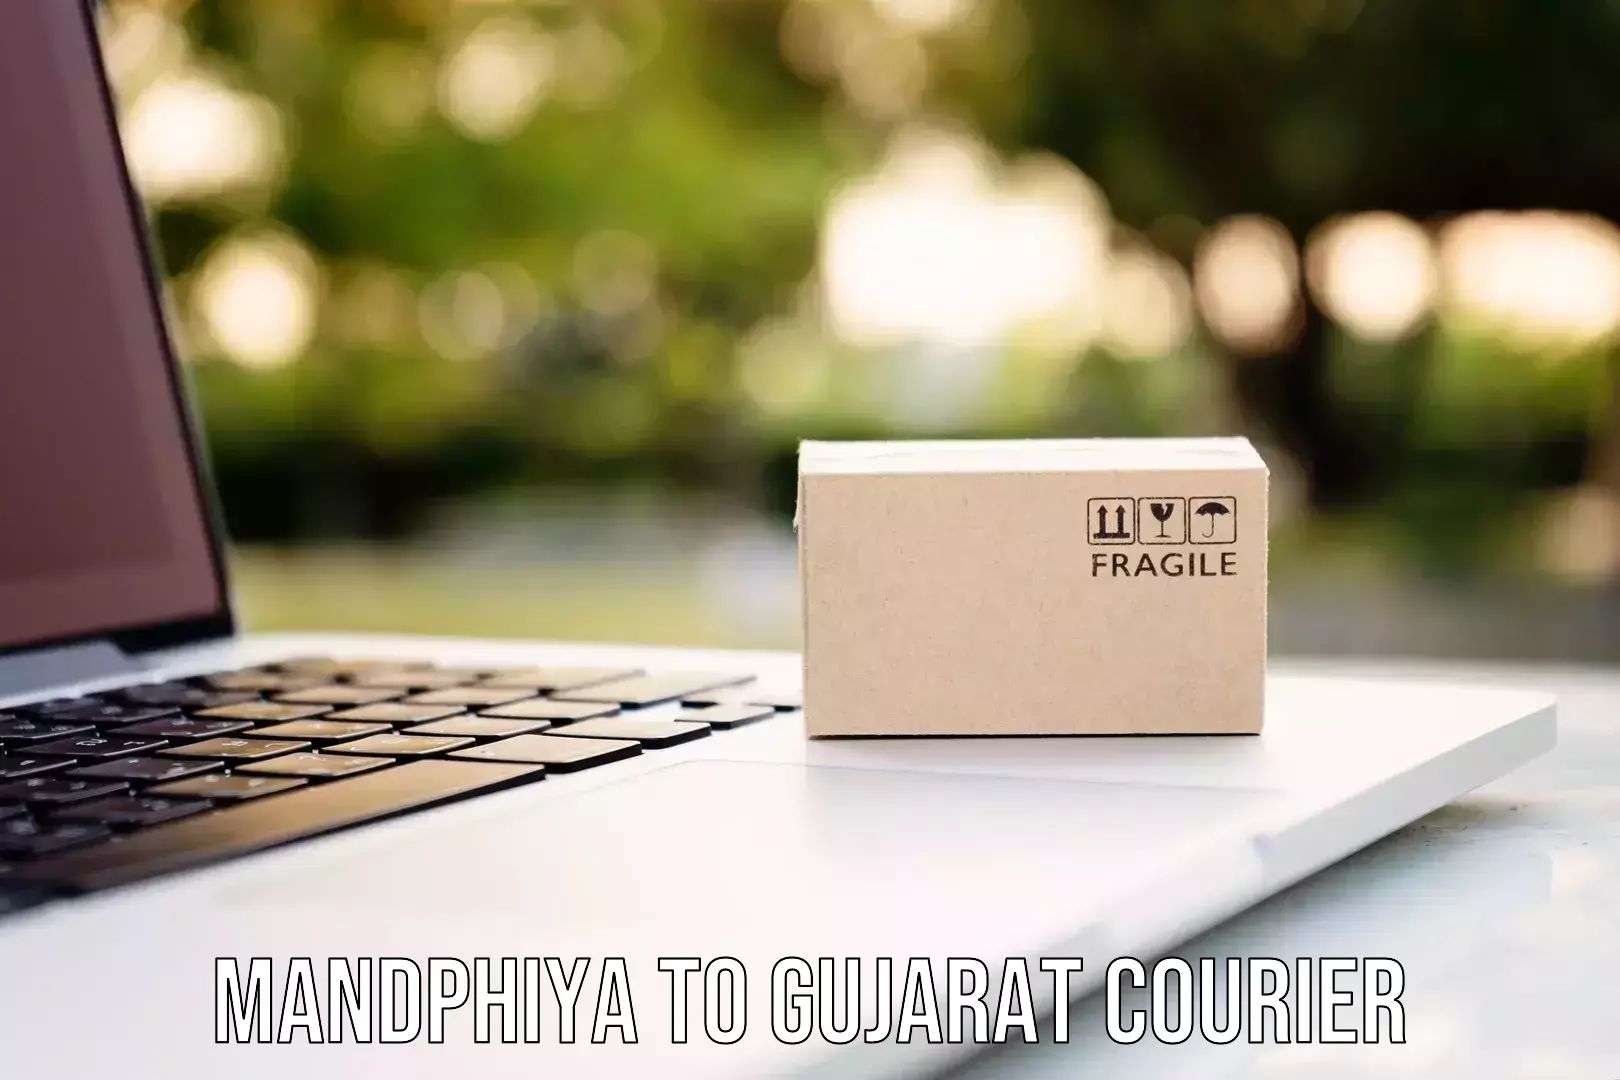 Global courier networks Mandphiya to Gujarat